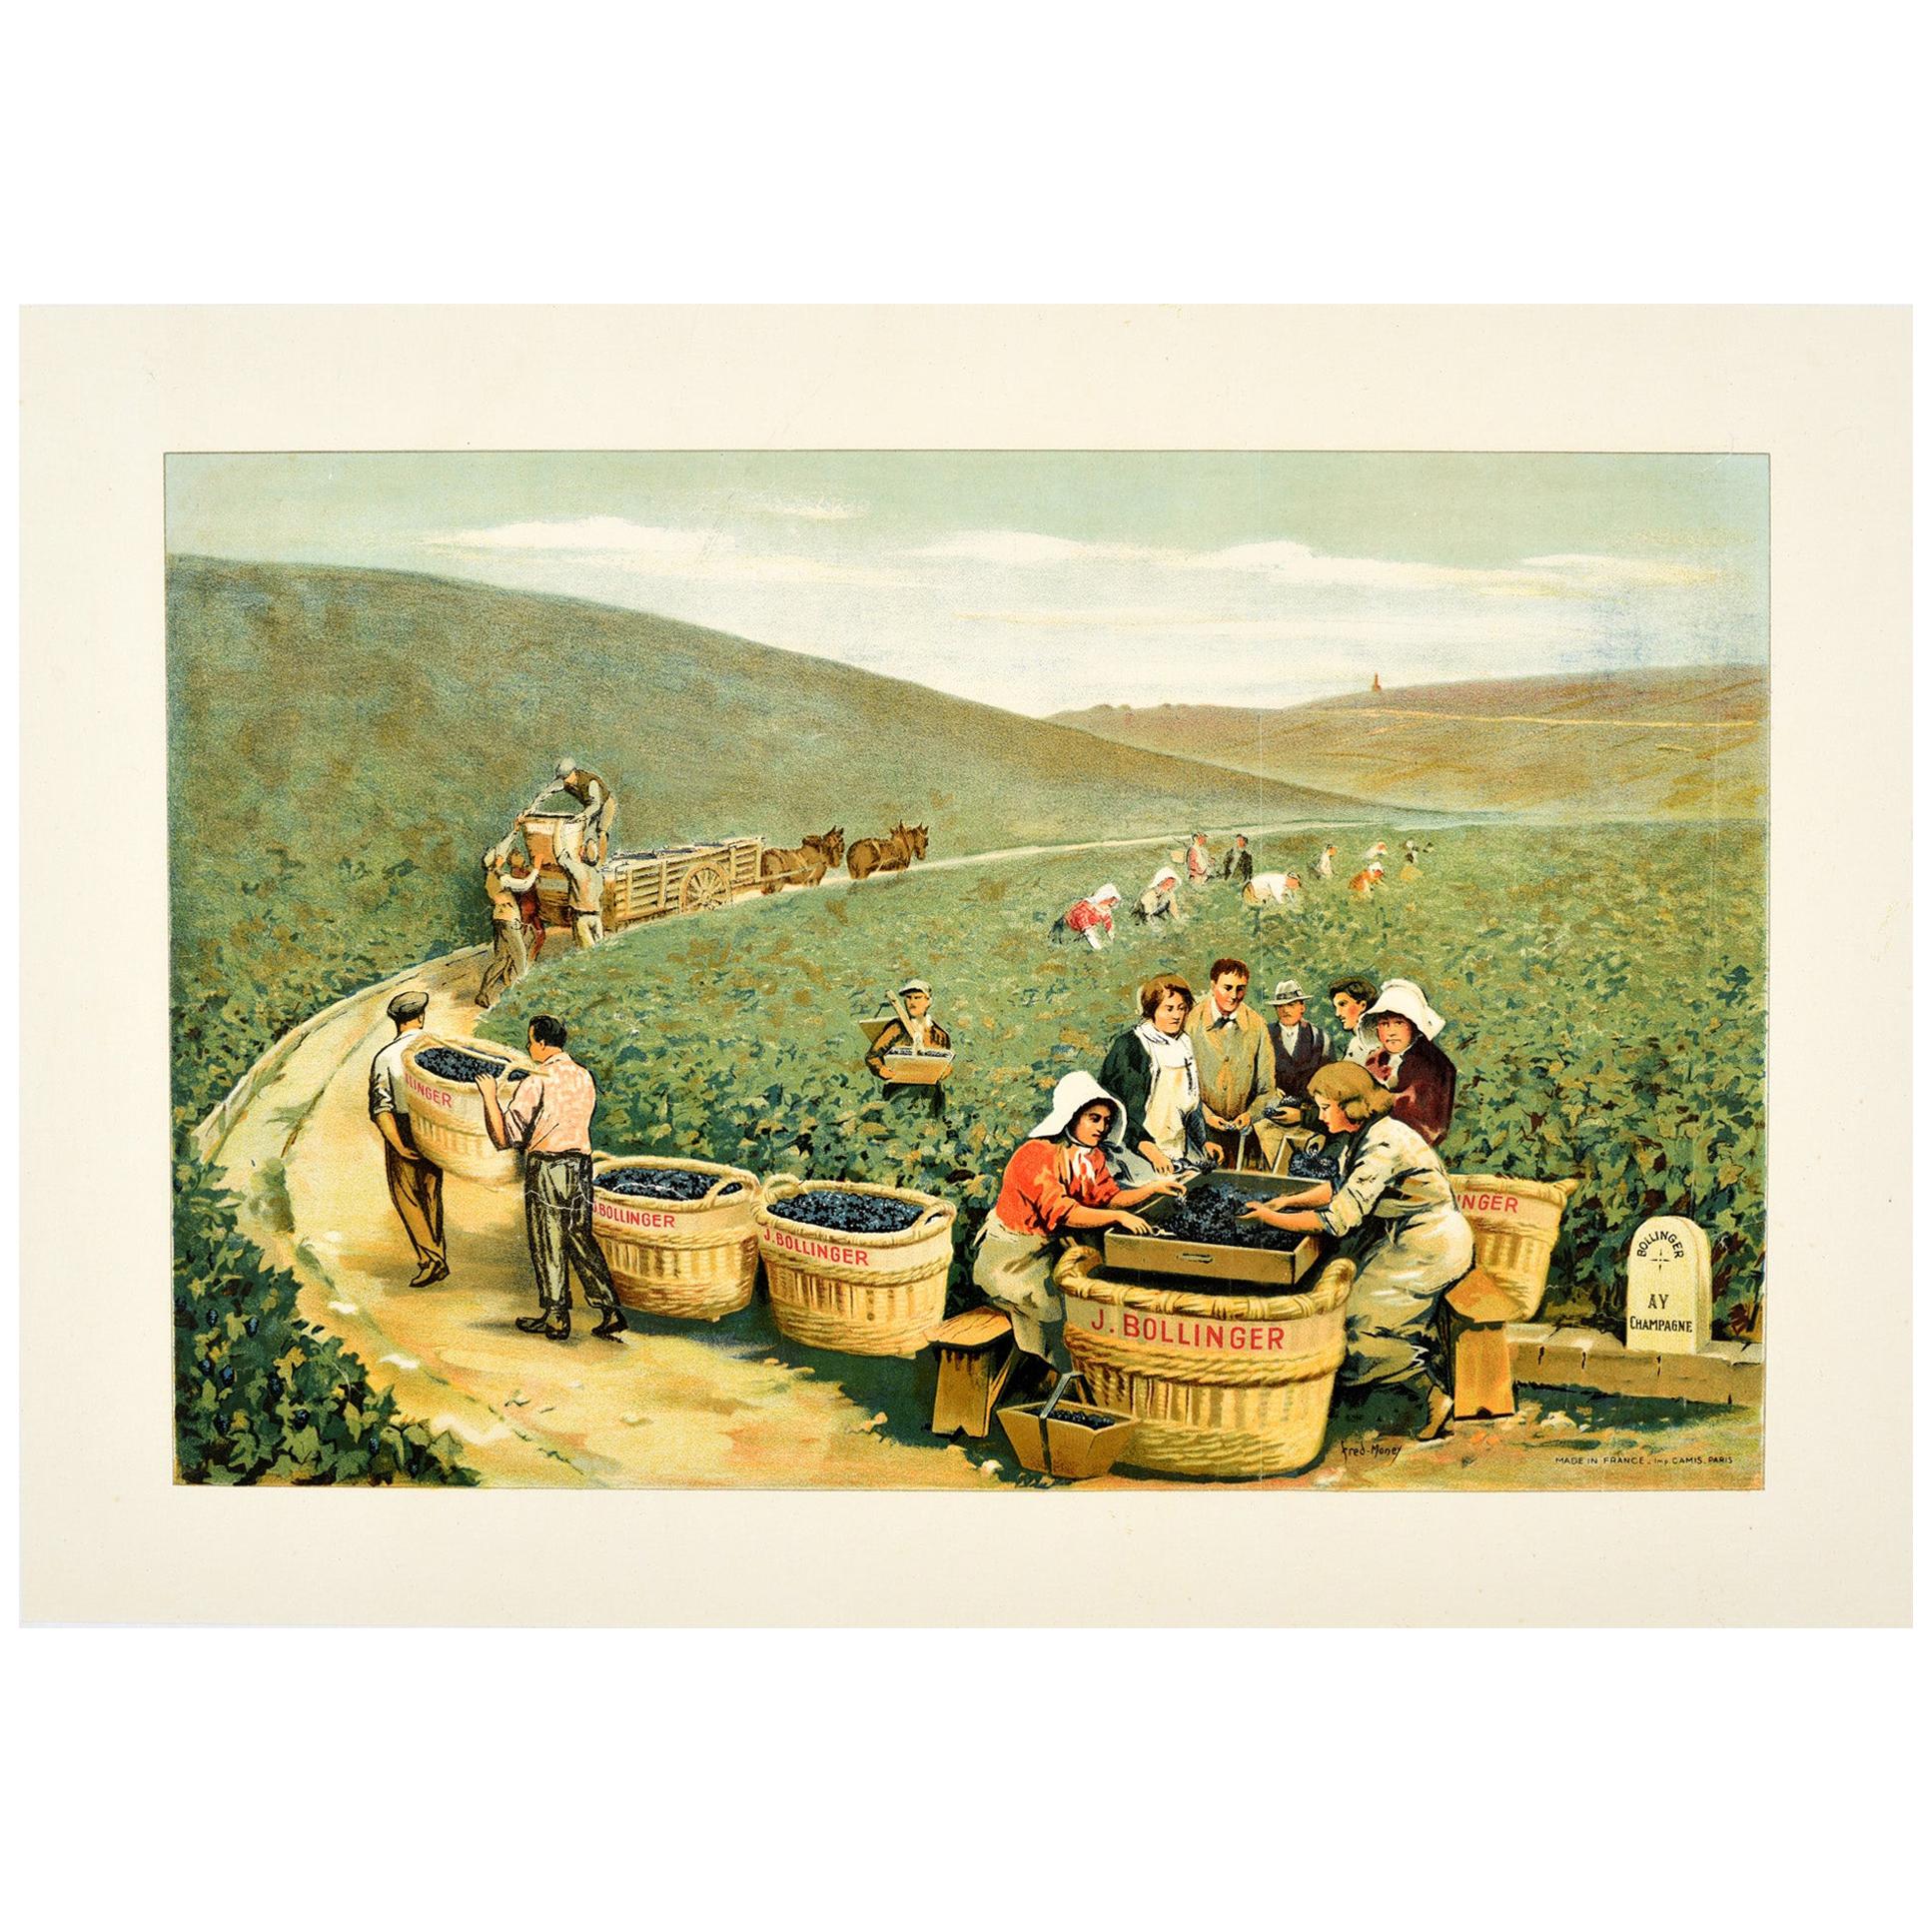 Original Antikes J. Bollinger Champagner-Poster, Sekt, Vineyard Ay, Frankreich